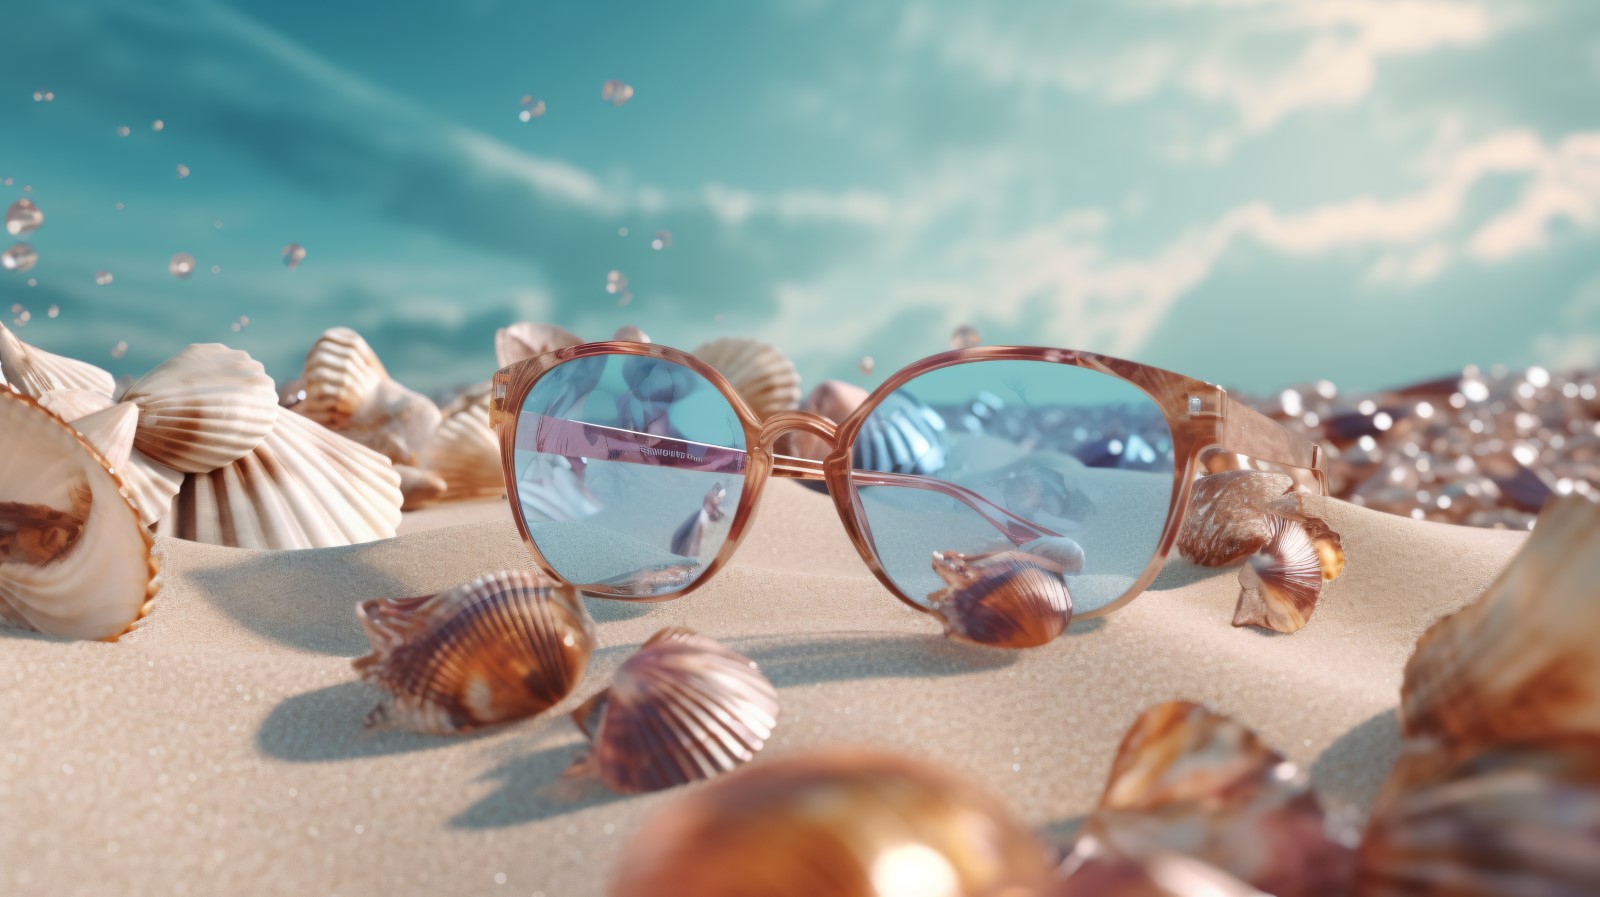 Beach sunglasses and seashells falling summer background 321